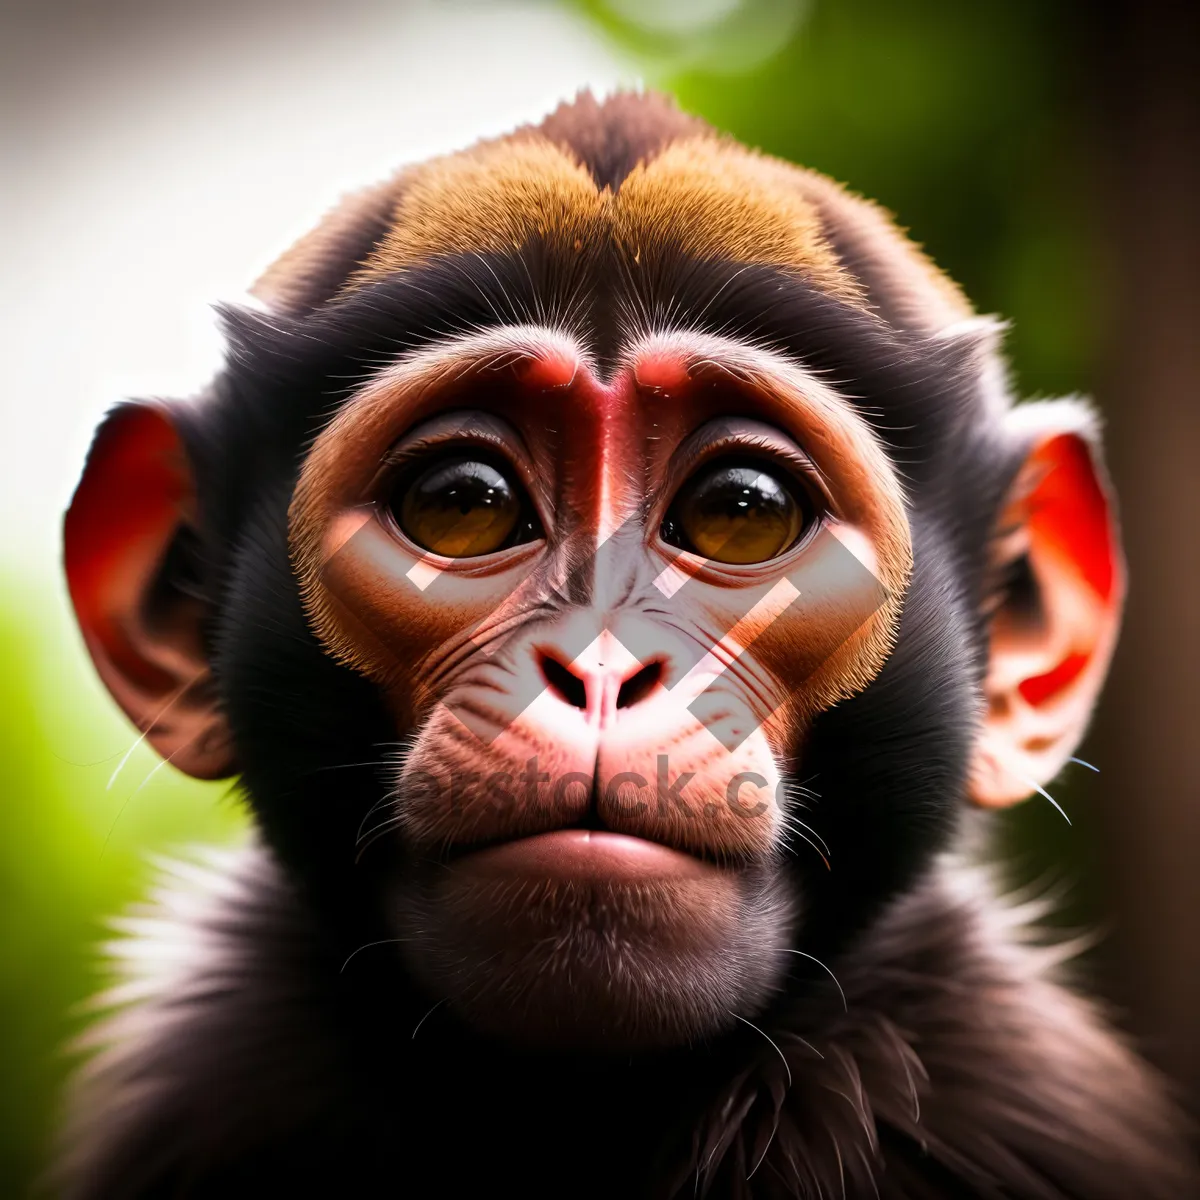 Picture of Primate Wonderland: Wild Orangutan in Jungle Nursery.